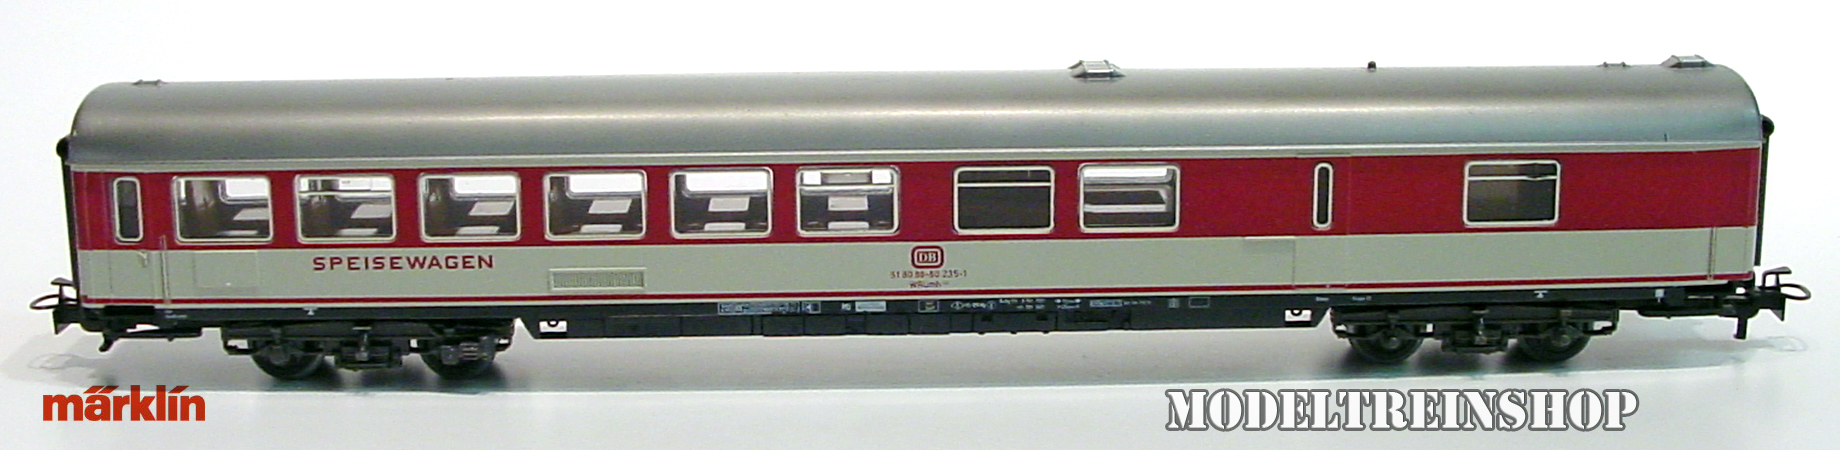 Marklin HO 4094 V2 D-trein Restauratiewagen met inrichting - Modeltreinshop